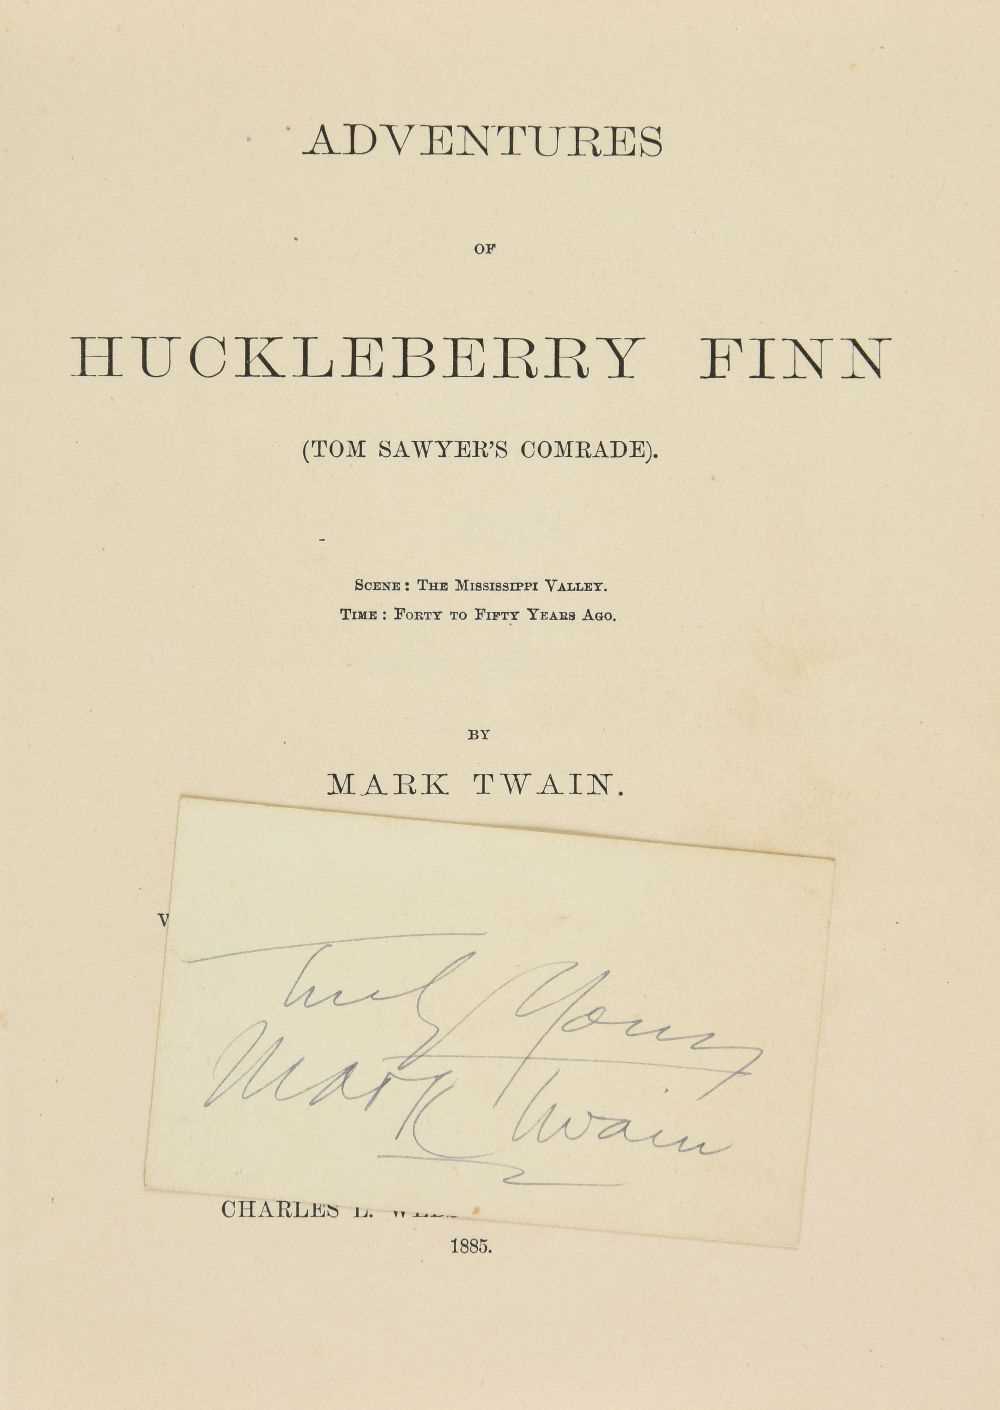 Lot 658 - Clemens (Samuel Langhorne, i.e. "Mark Twain"). Adventures of Huckleberry Finn, 1st edition, 1885